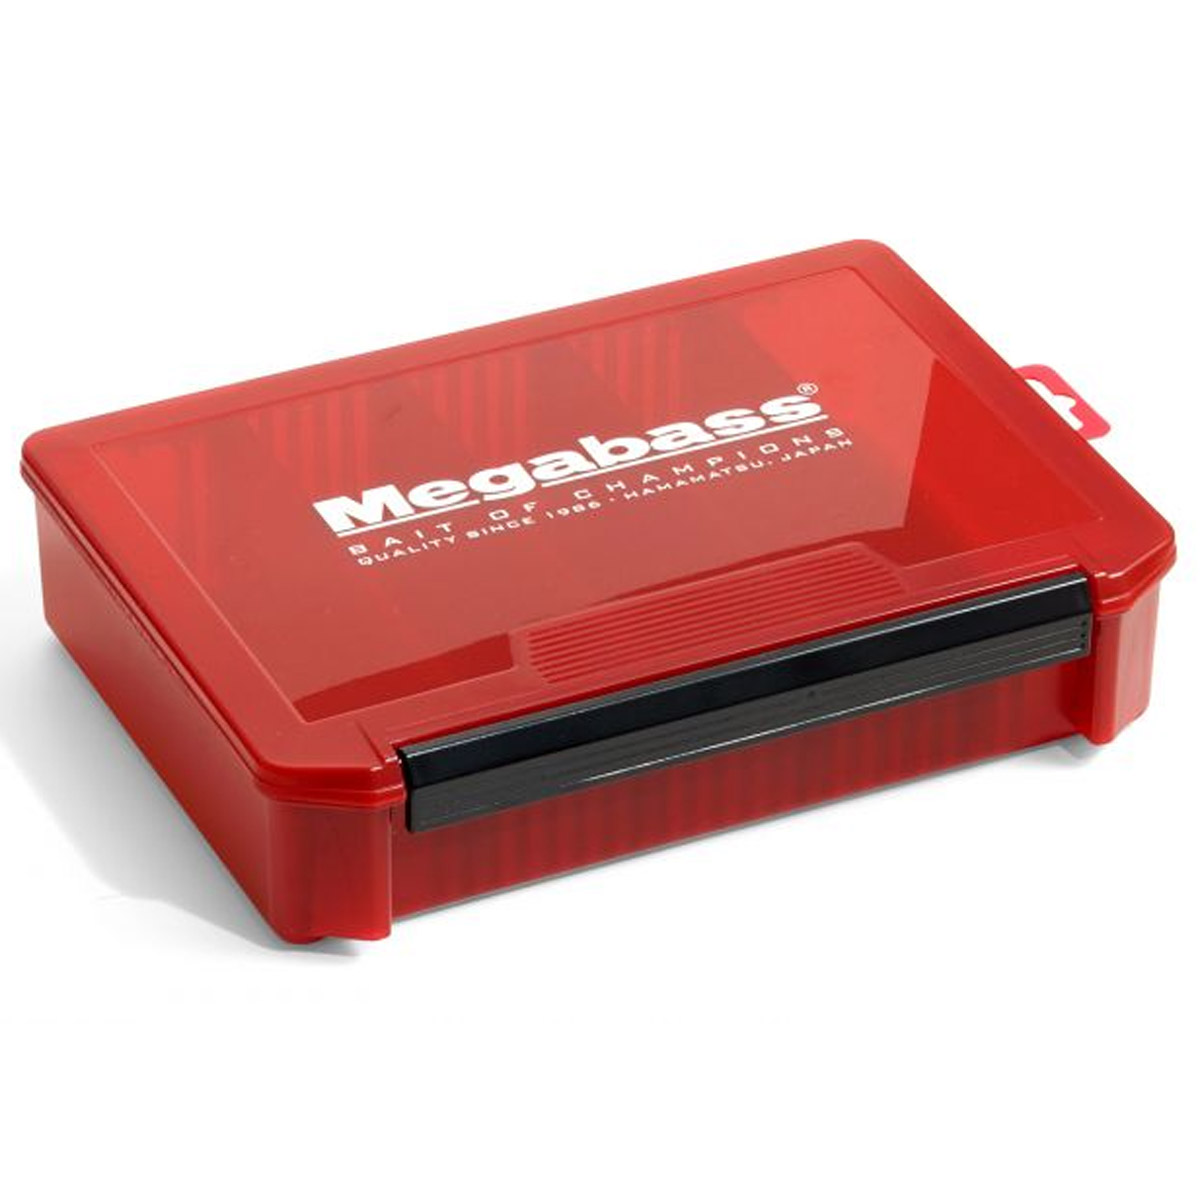 Megabass Lunker Lunch Box 3020NDDM Red